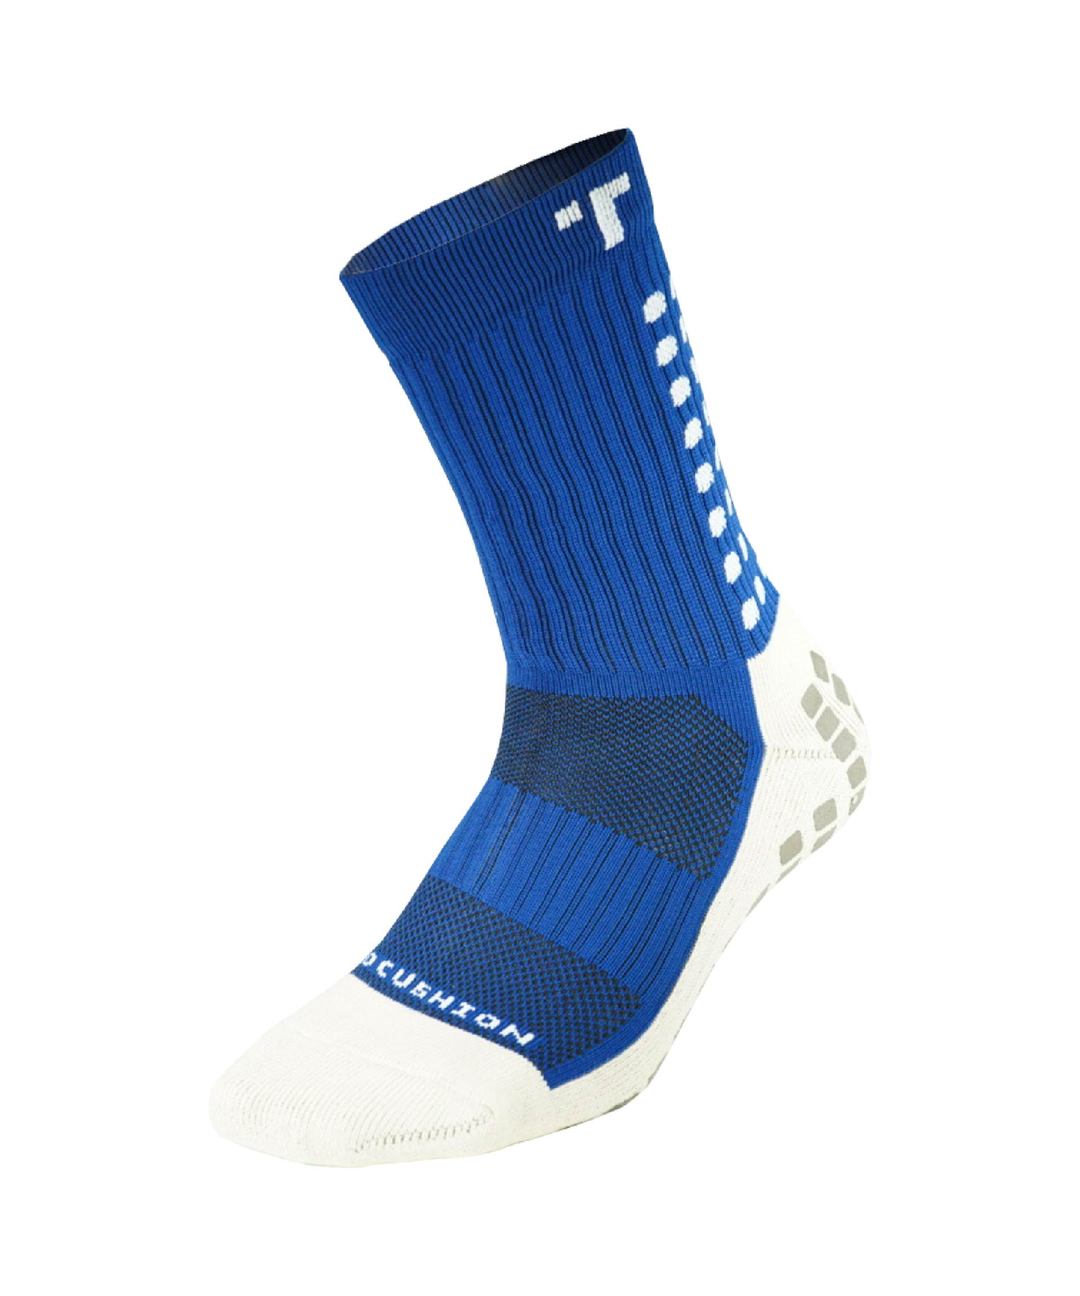 Trusox 3.0 Mid Calf White Socks, Large